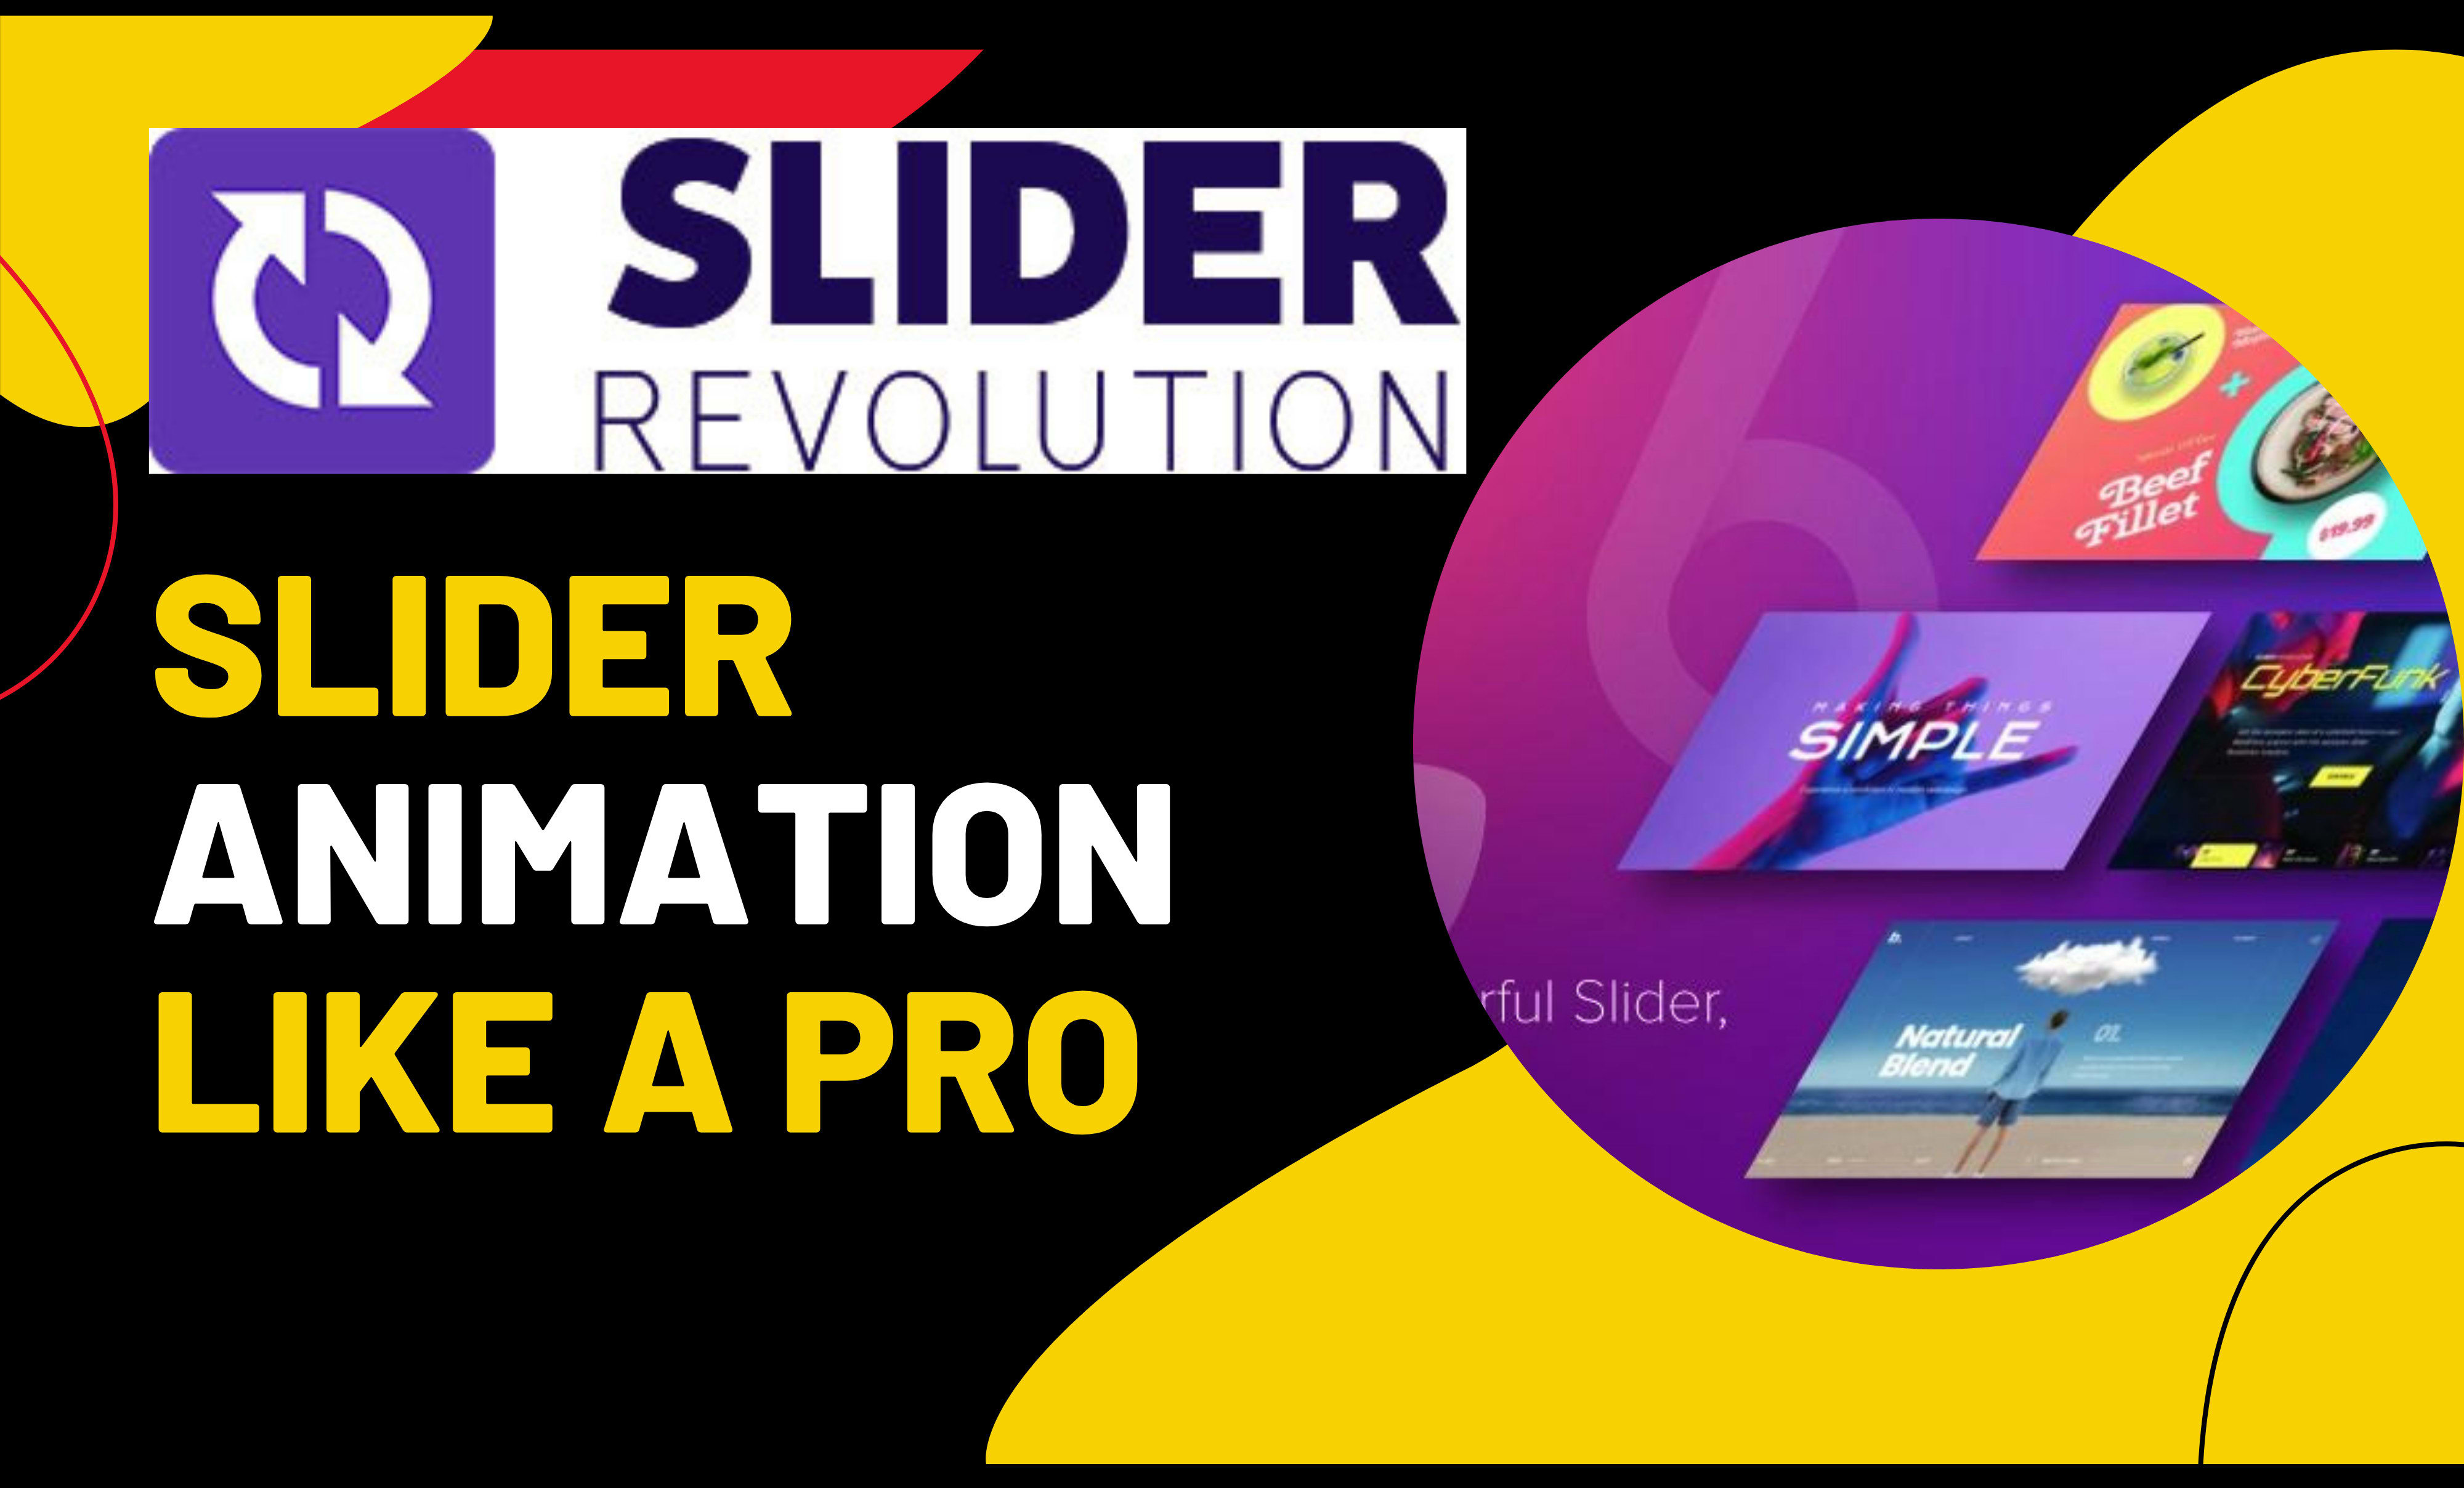 Design a slider revolution in wordpress website by Wpcleaner | Fiverr